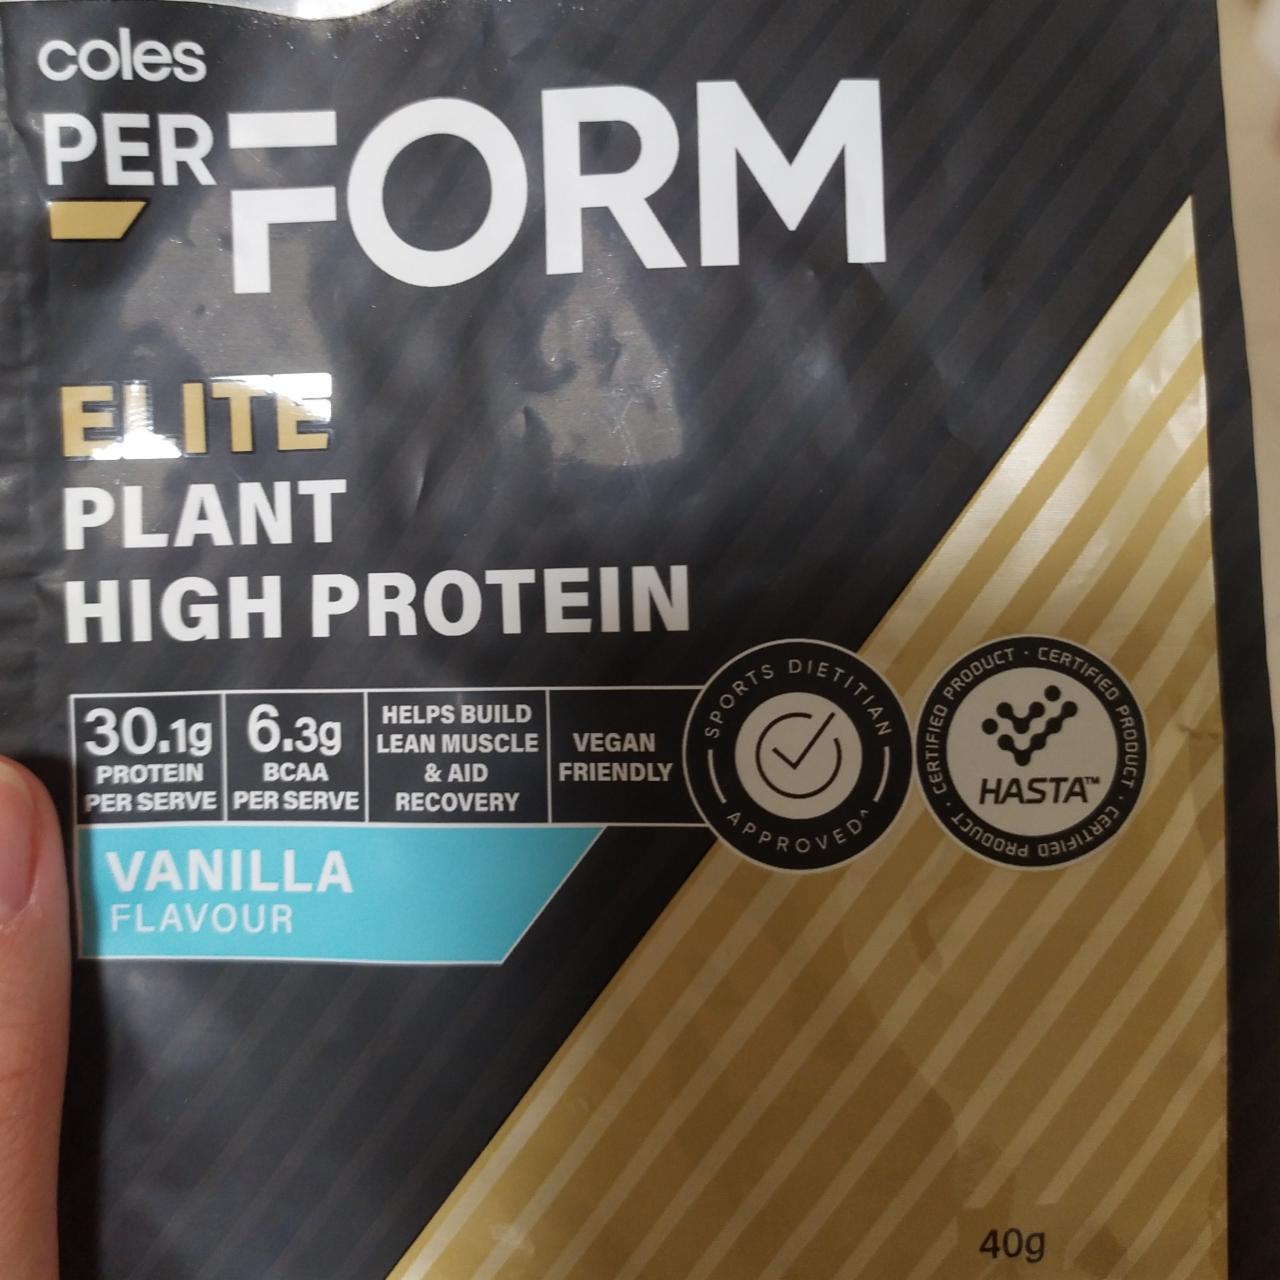 Fotografie - PerForm Elite plant high protein Vanilla flavour Coles